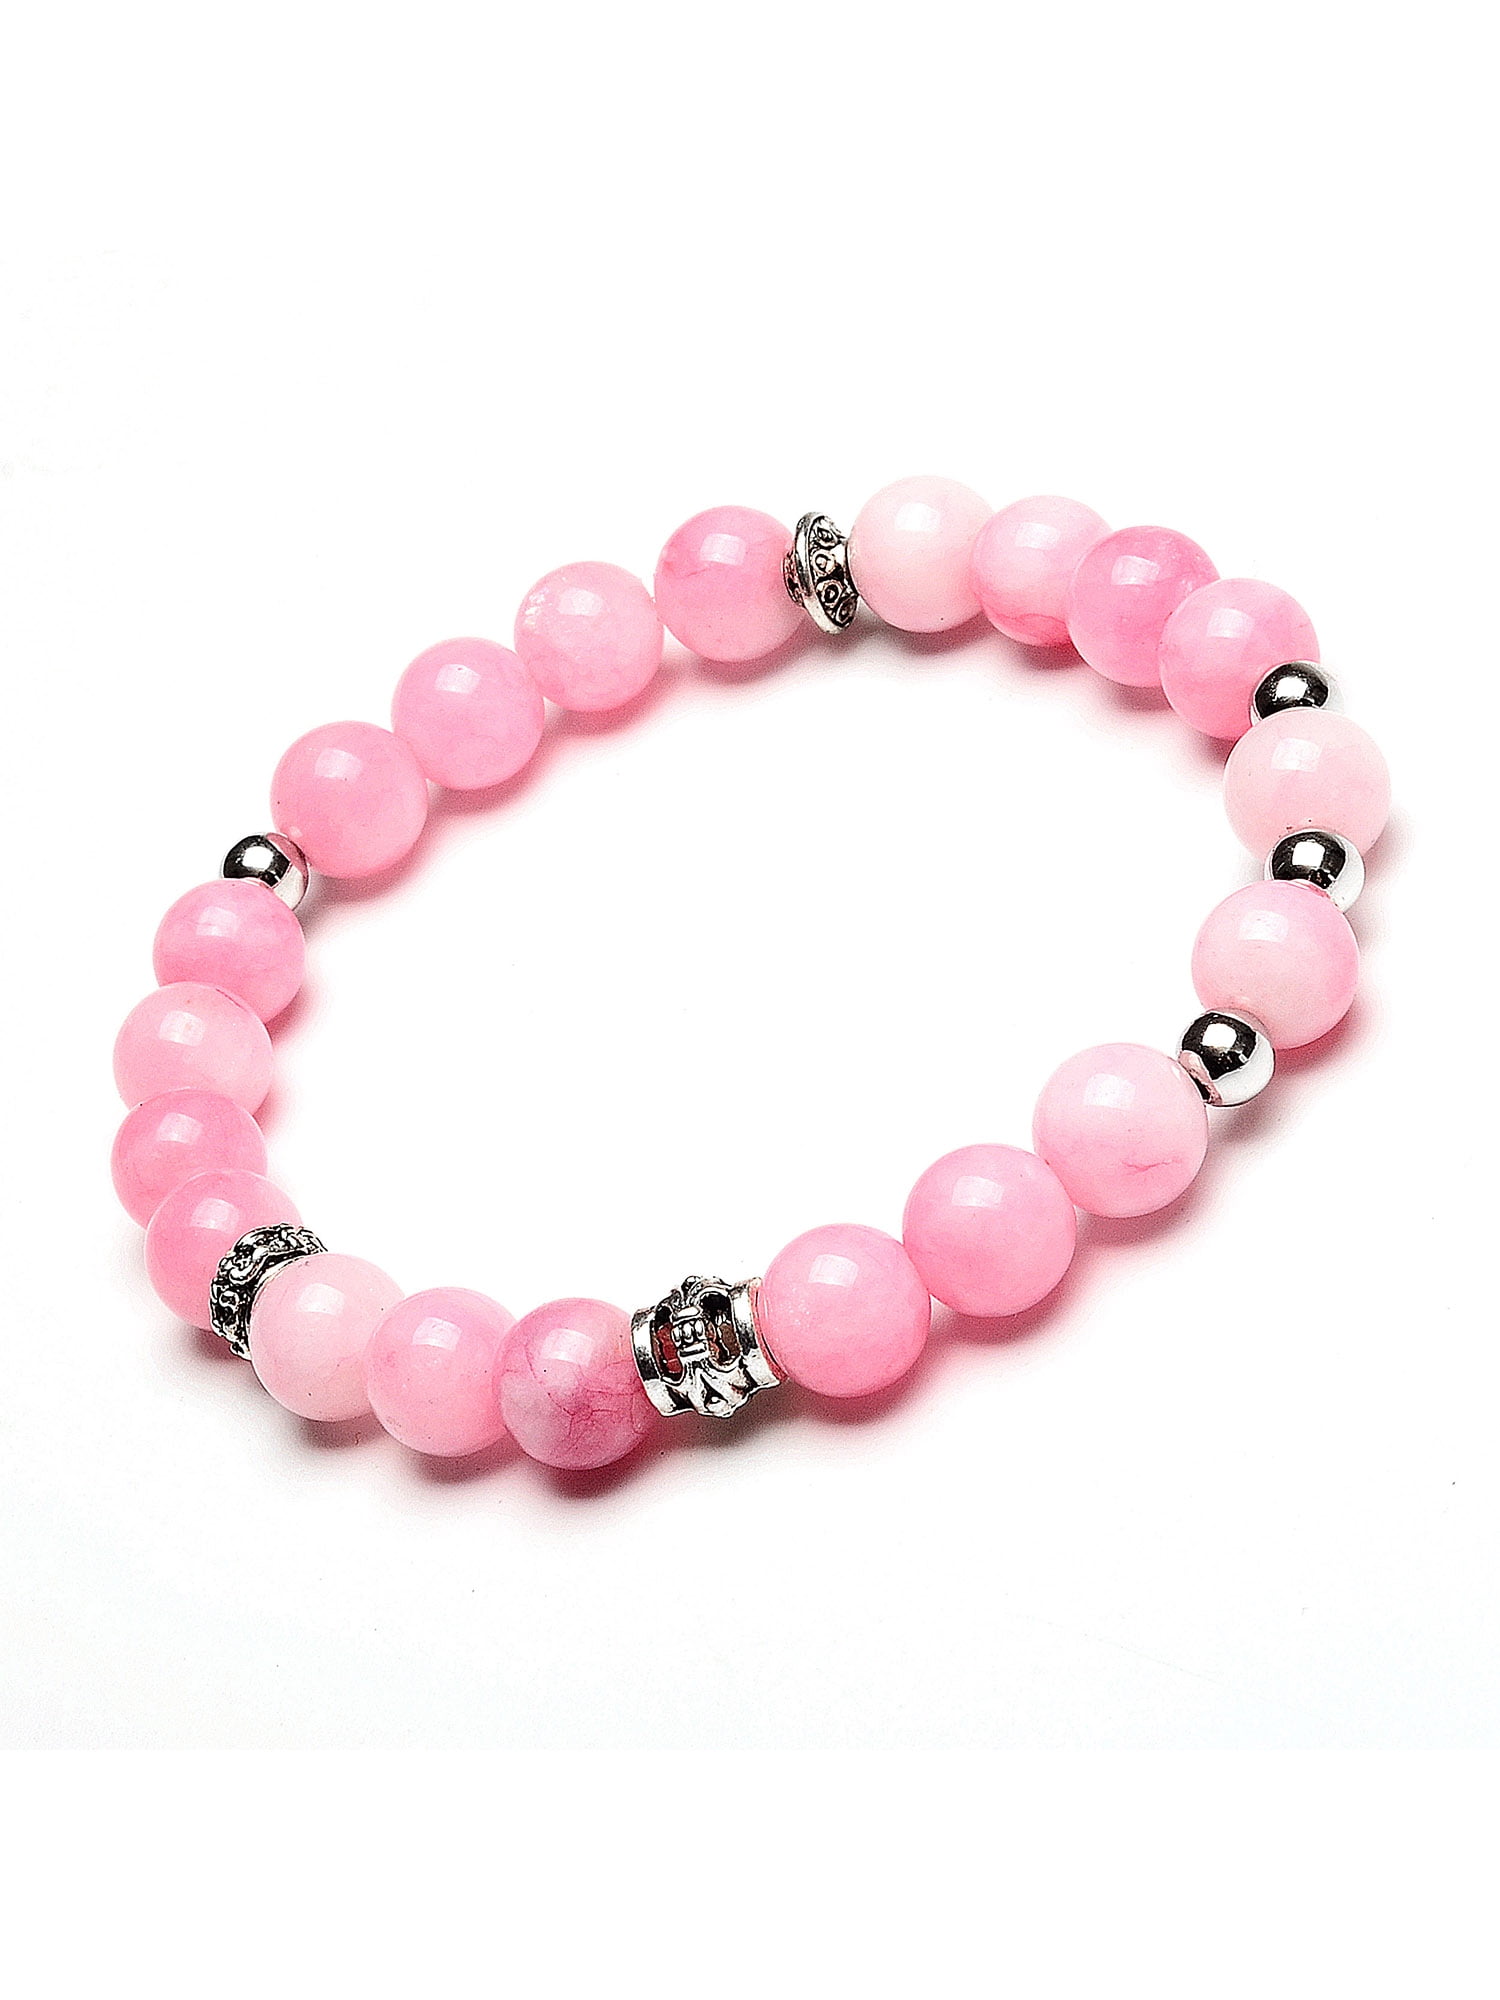 Solid Tone Stone Beads Charm Bracelet by Aloha 808: Pink